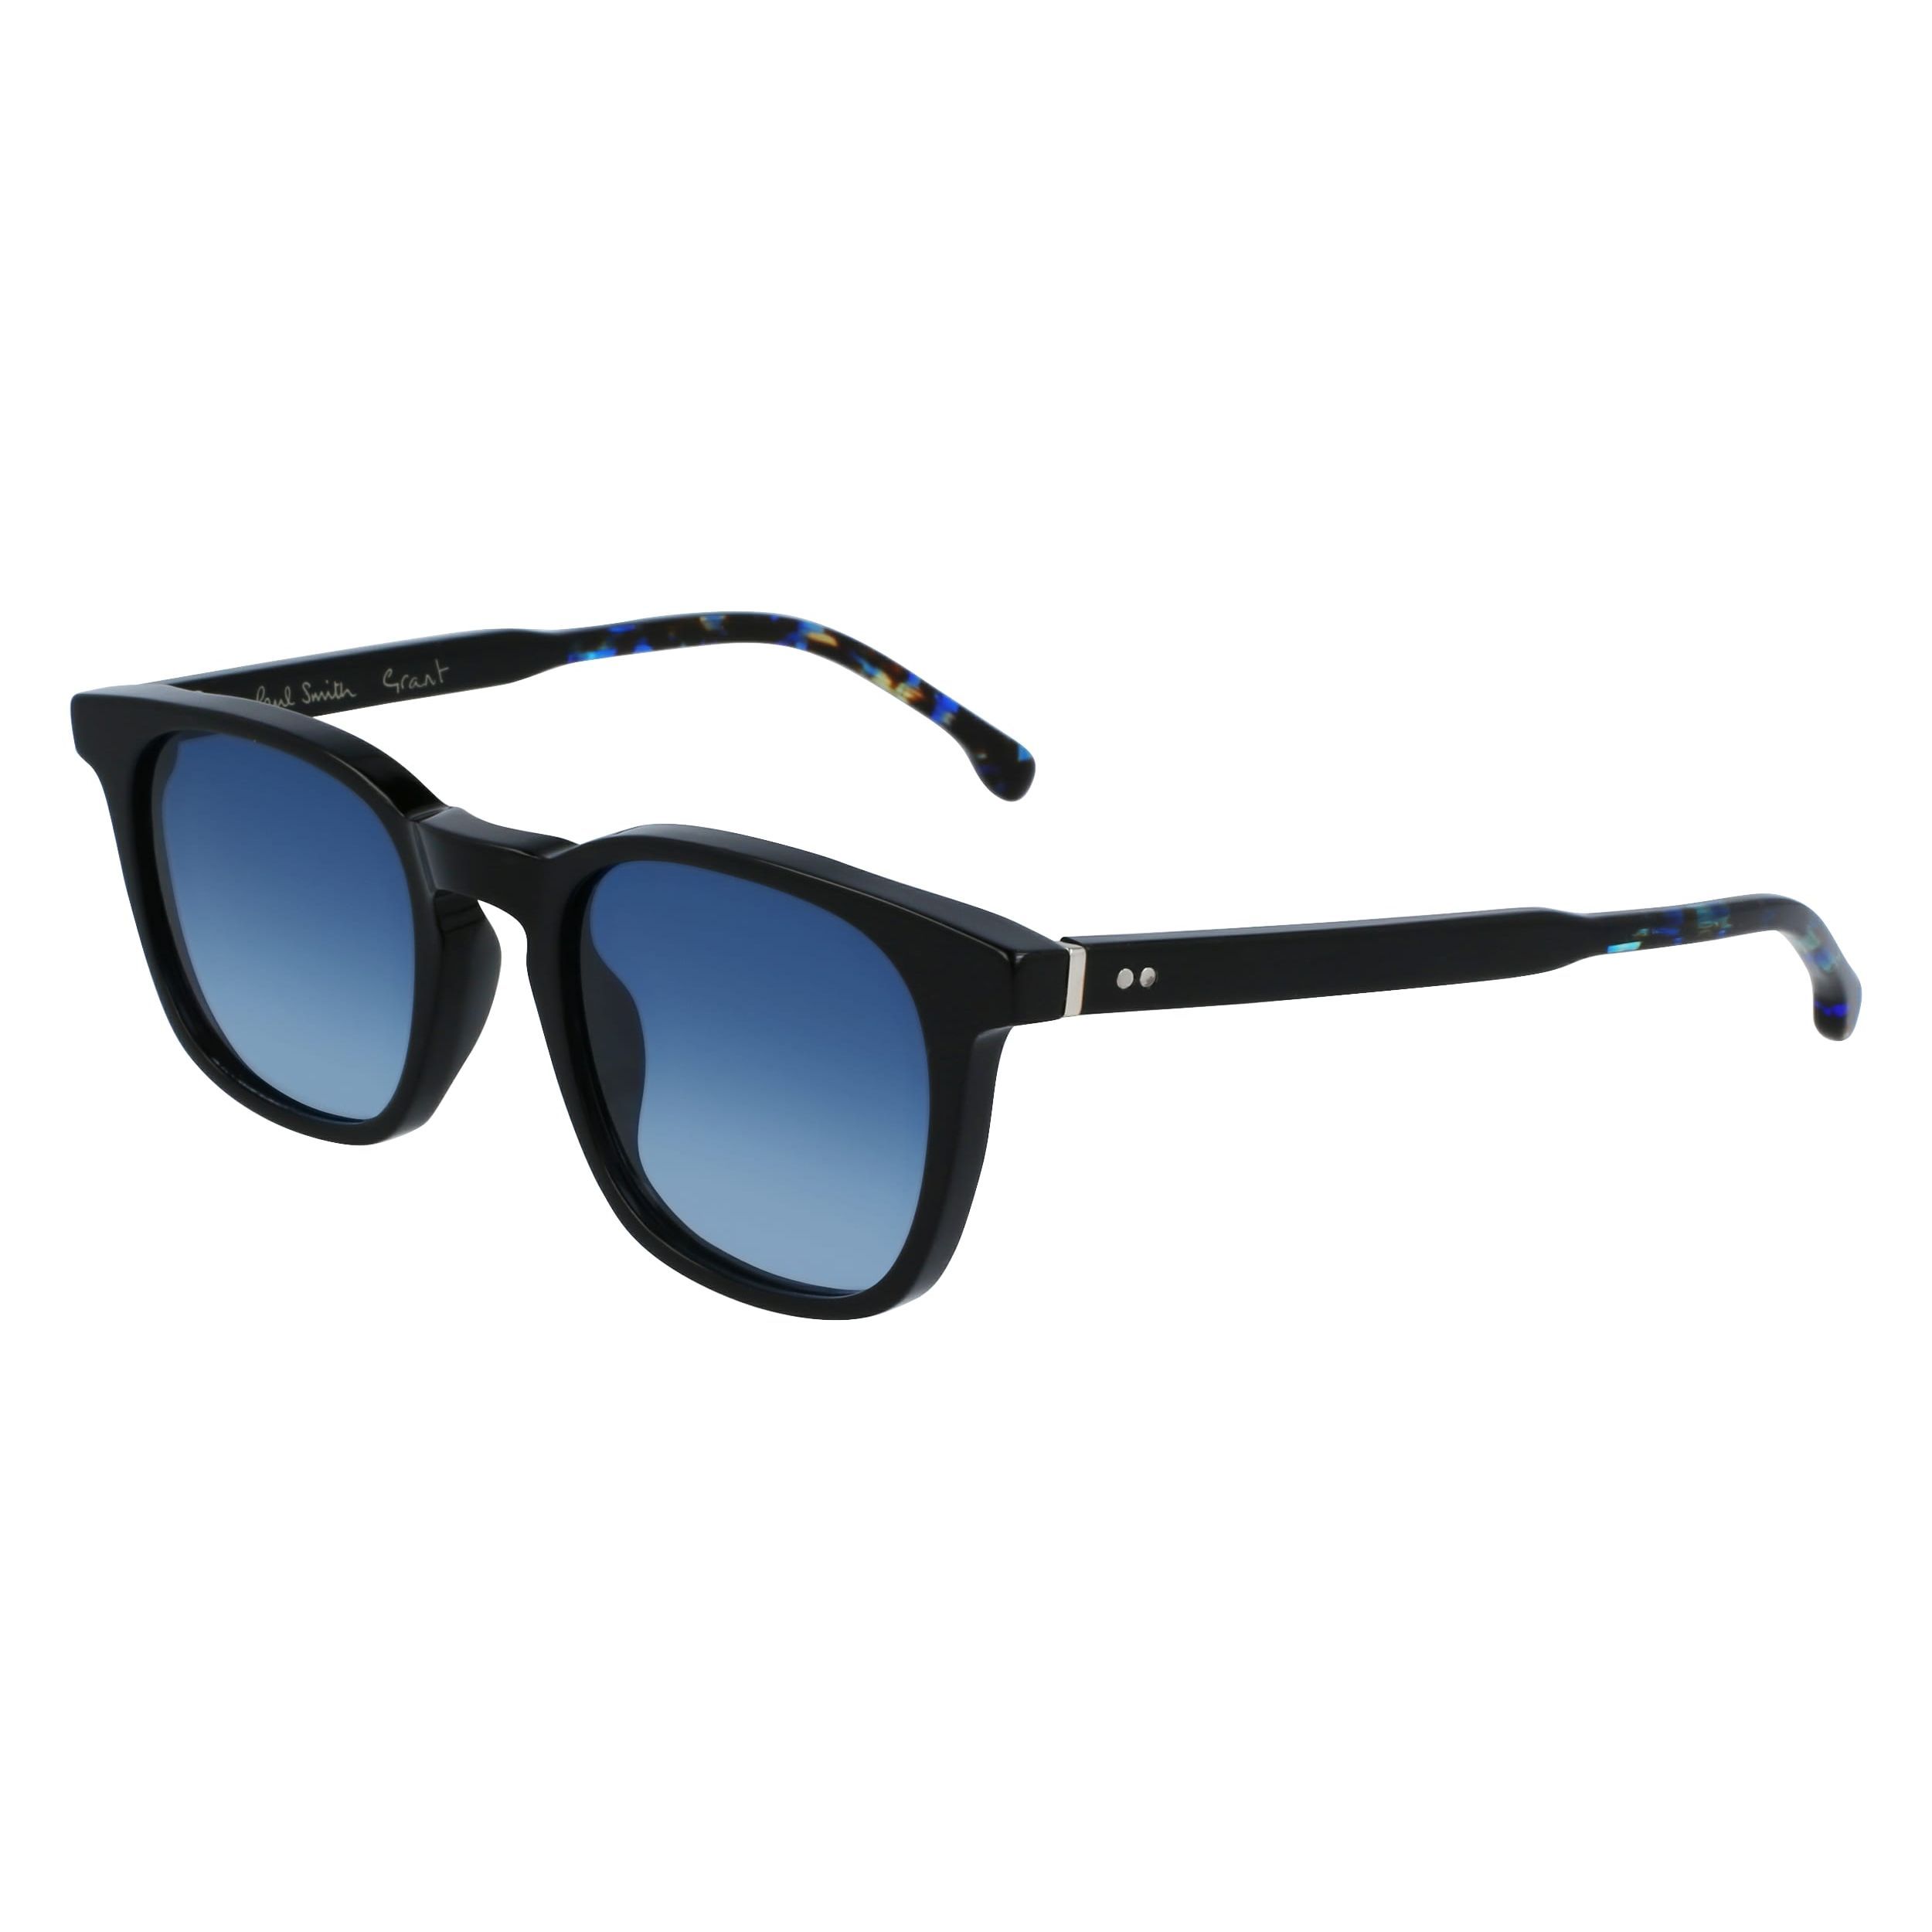 GRANT Oval Sunglasses 001 - size 50